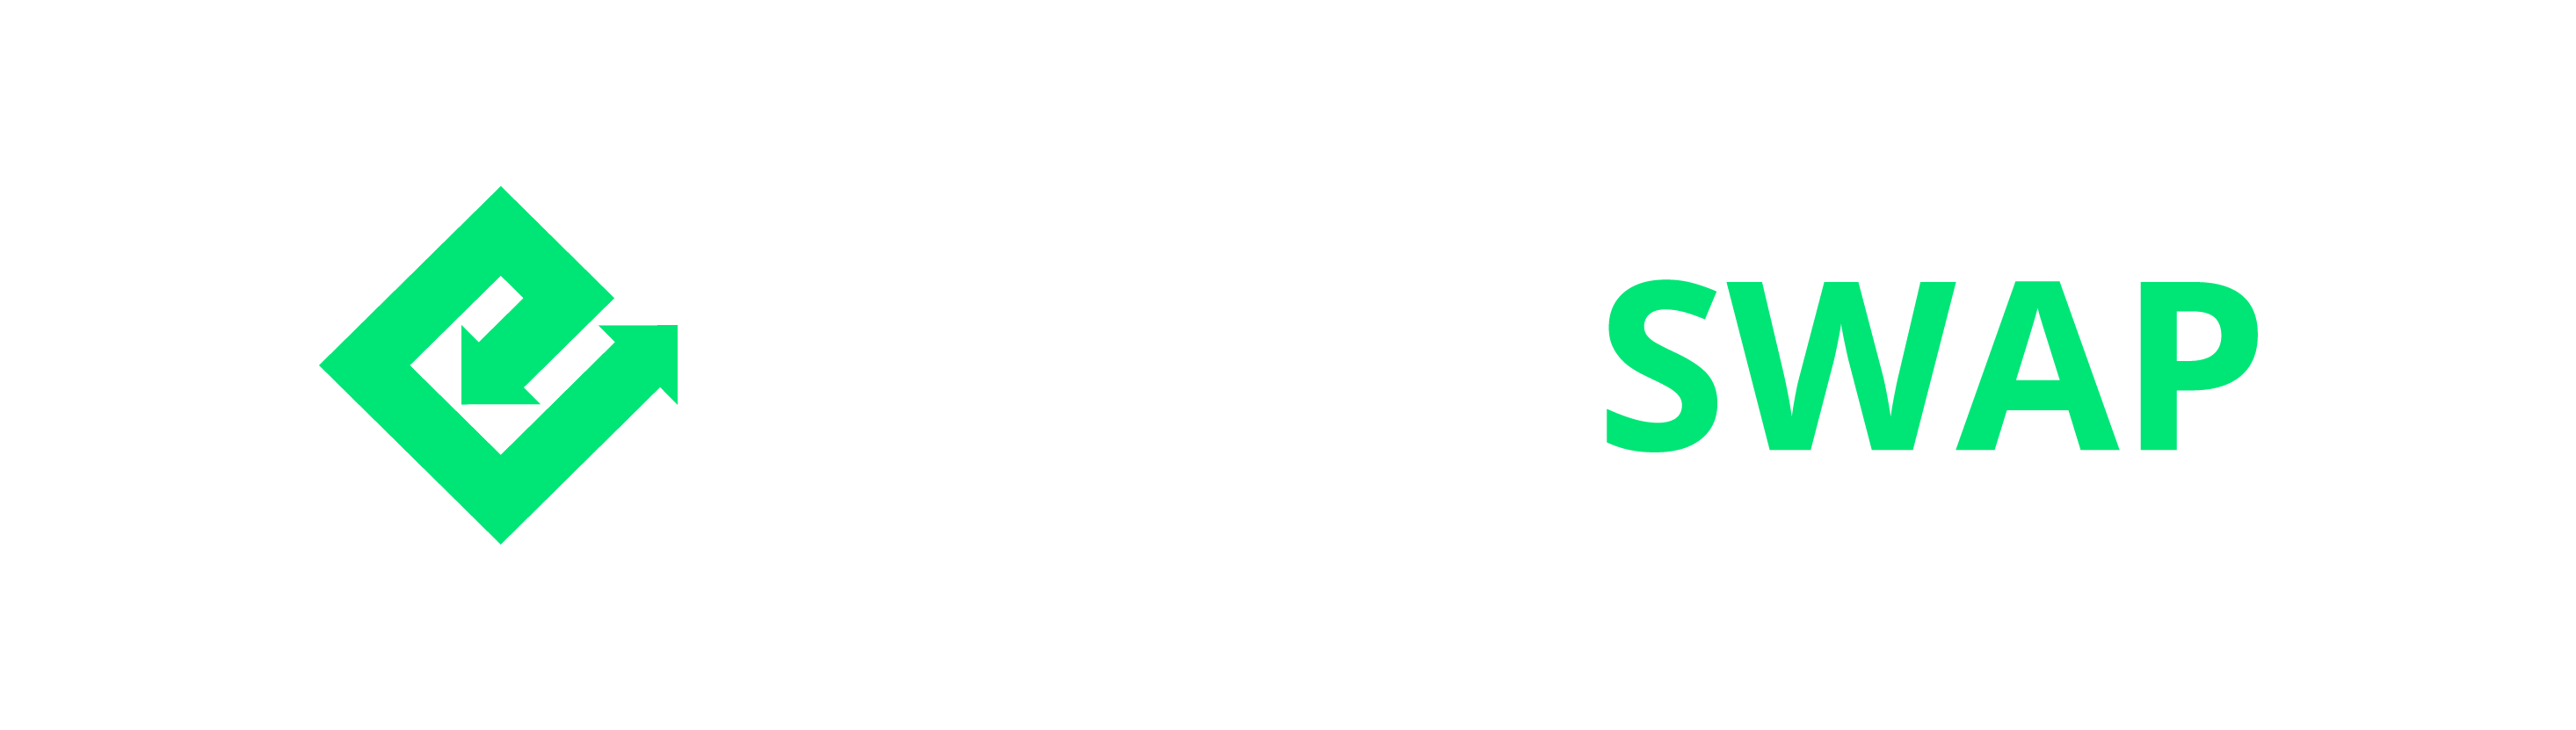 energiswap logo